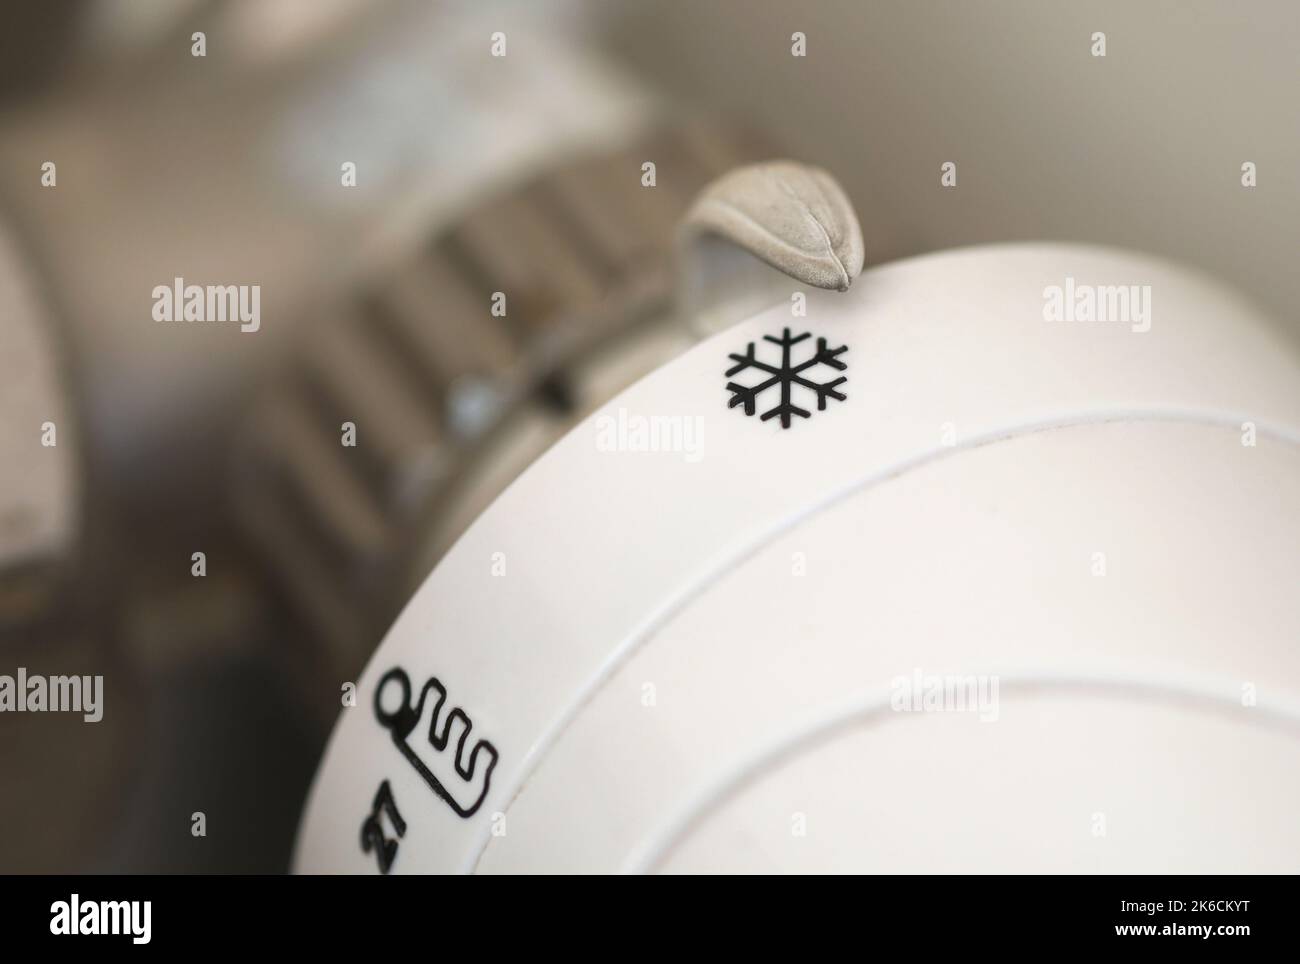 Heating radiator adjusting knob set to cold icon Stock Photo